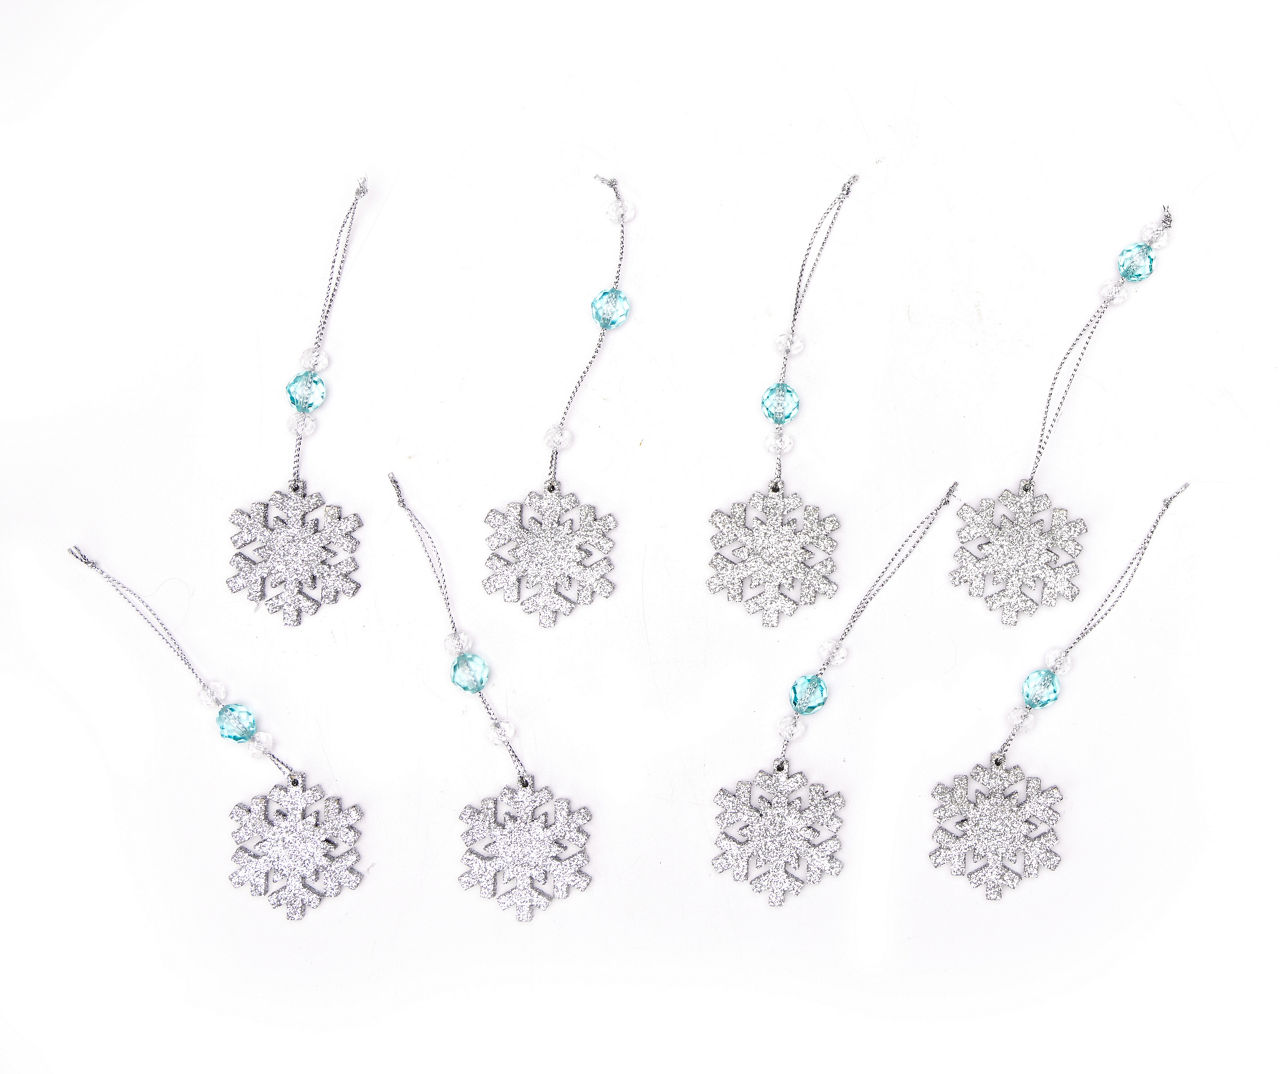 Winter Wonder Lane Silver Glitter Snowflakes Mini Ornaments, 9